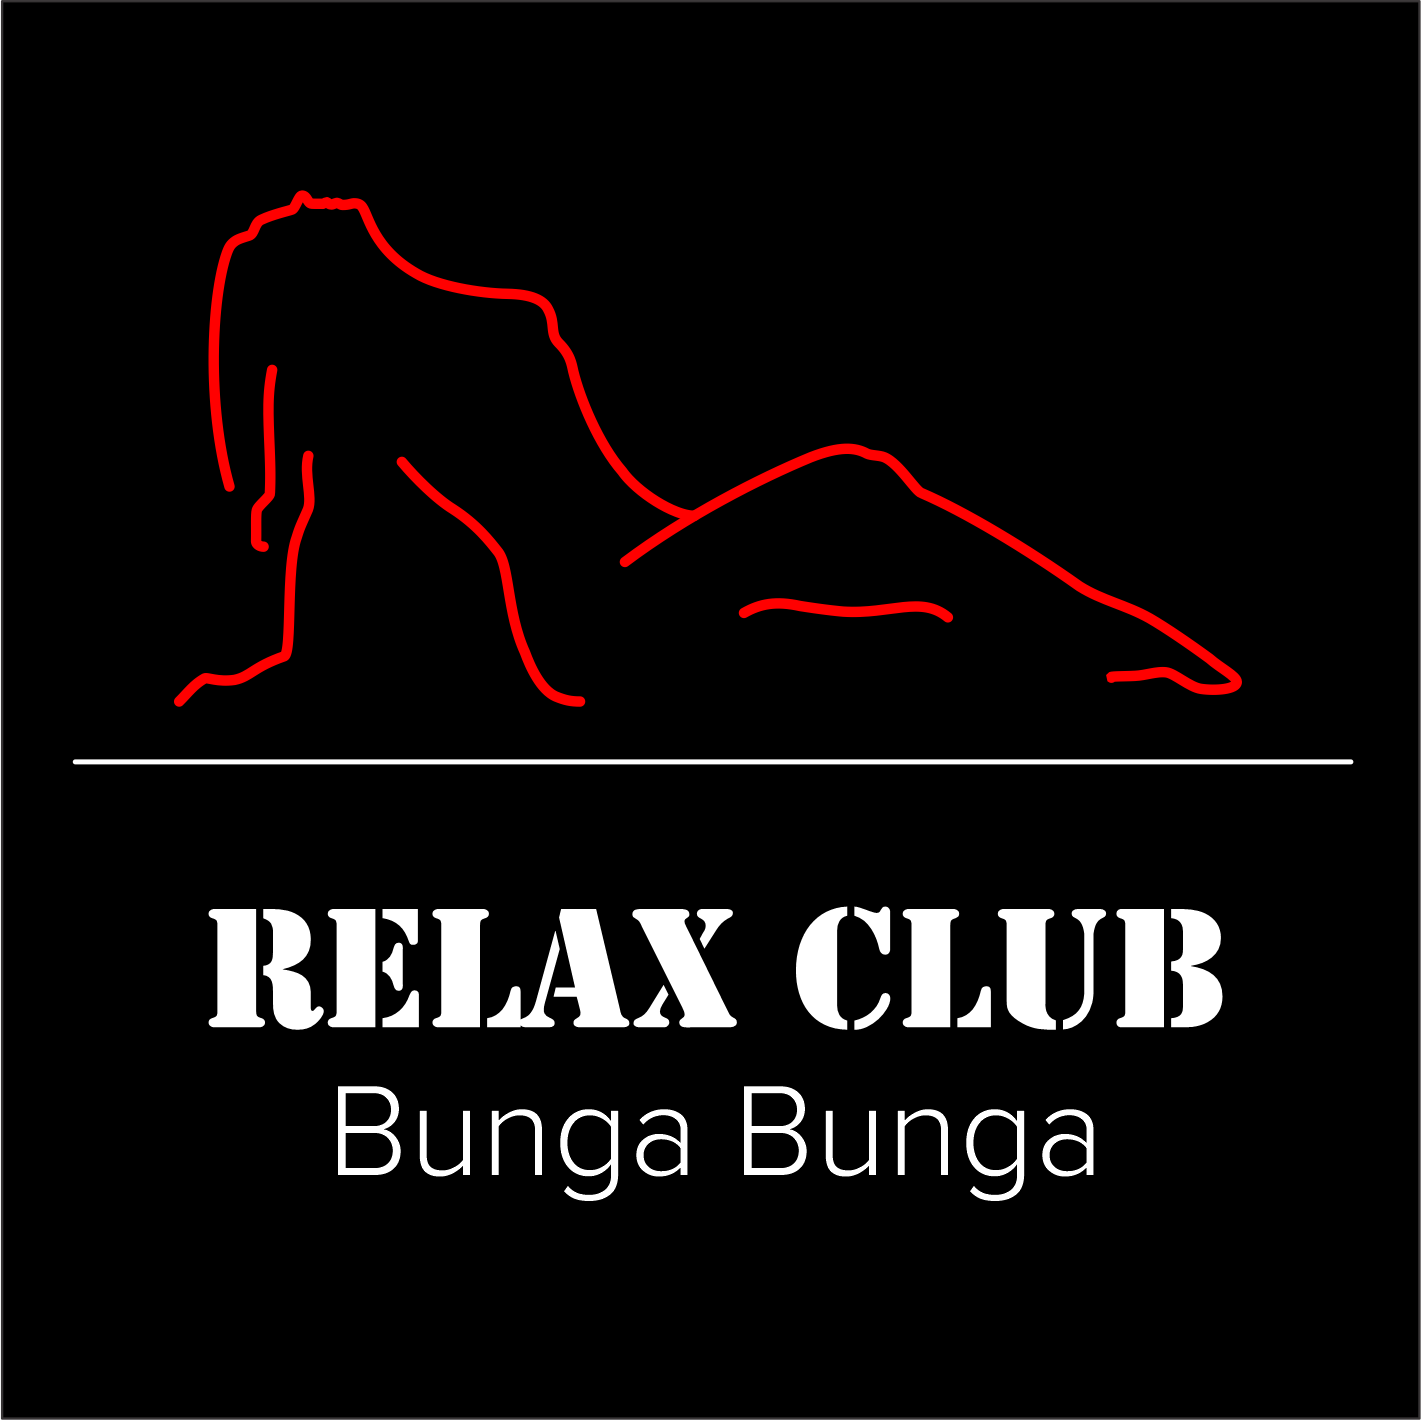 Relax club Bunga bunga